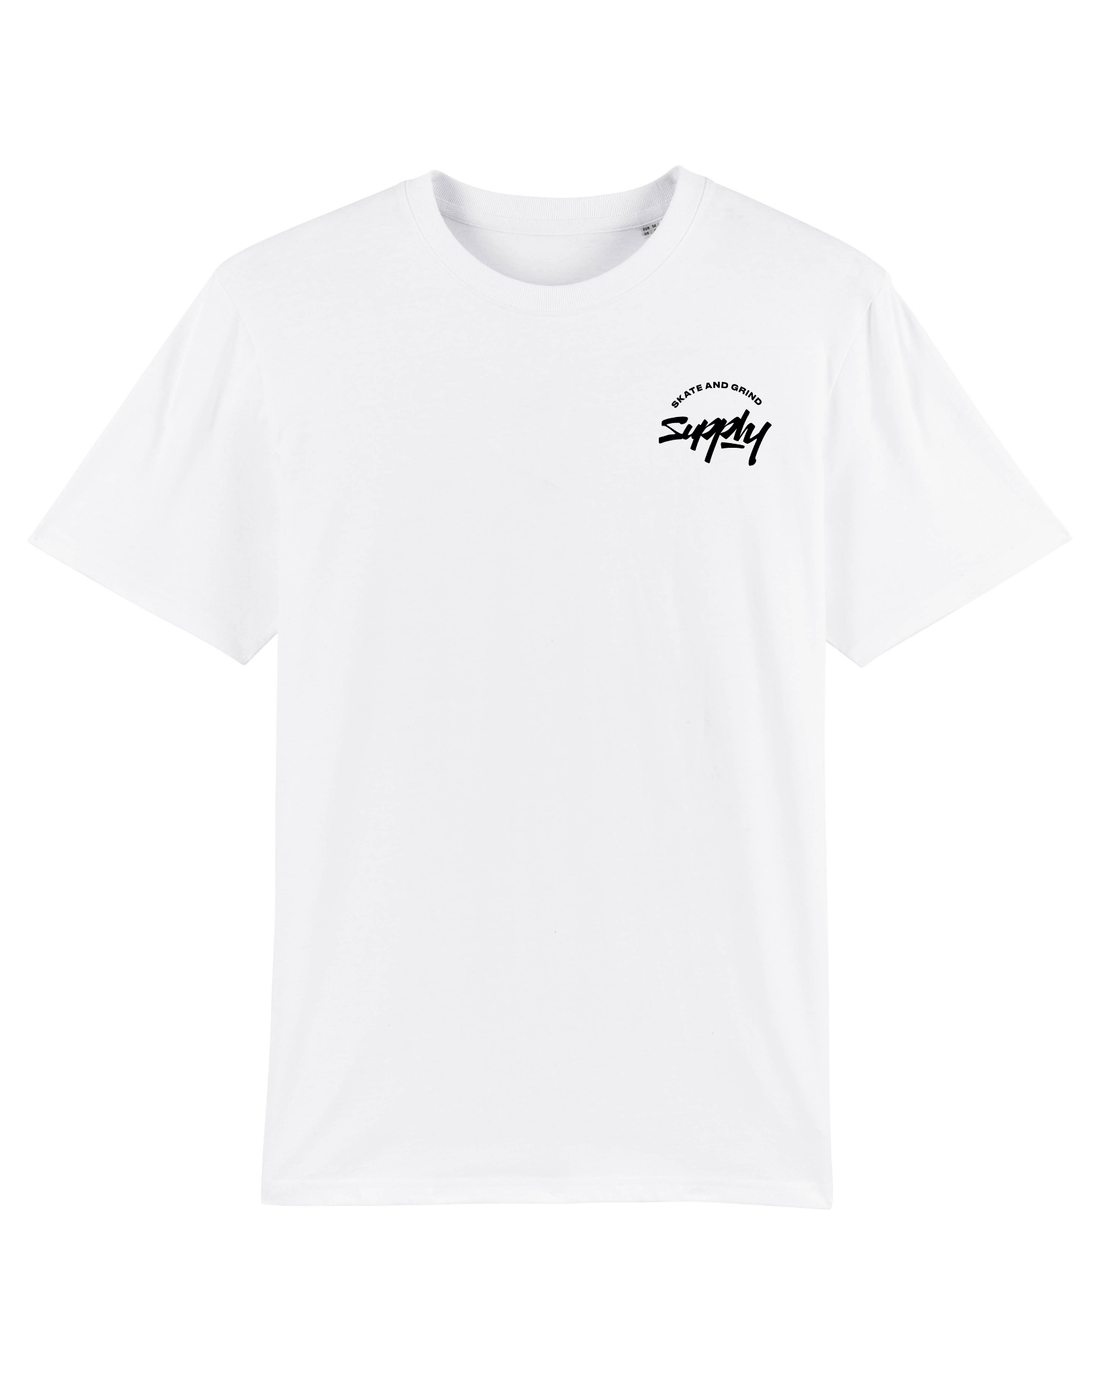 White Skater T-shirt, Skate and Grind Front Print